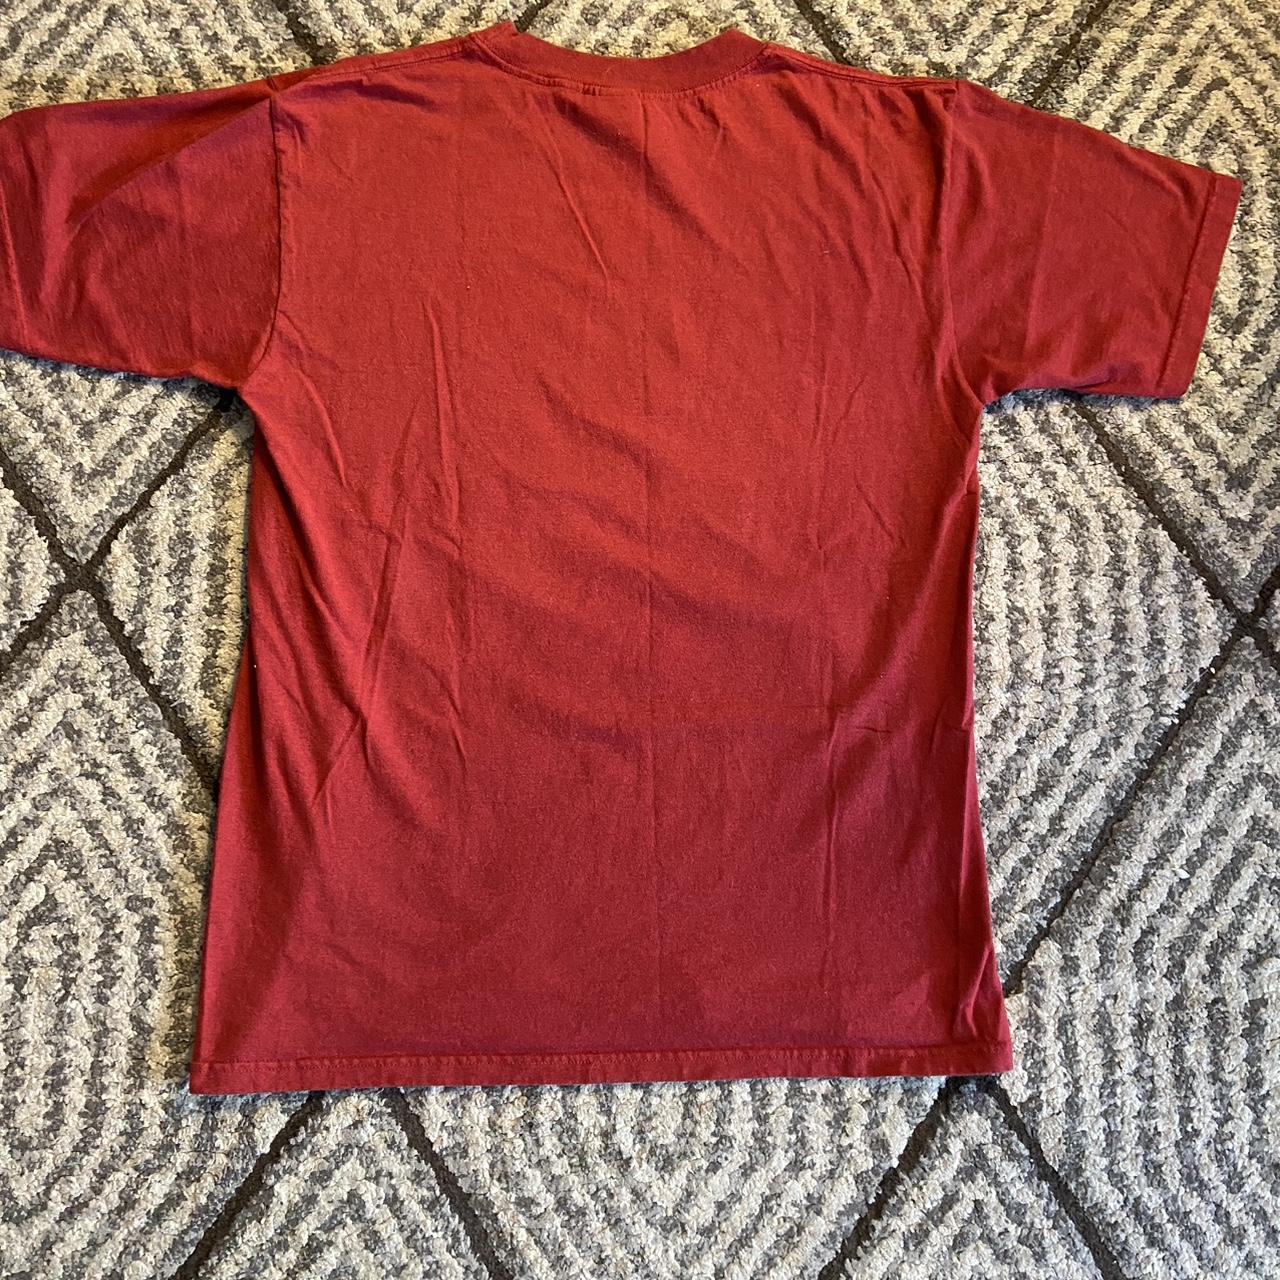 Vintage Grand Canyon national park shirt. Made in... - Depop